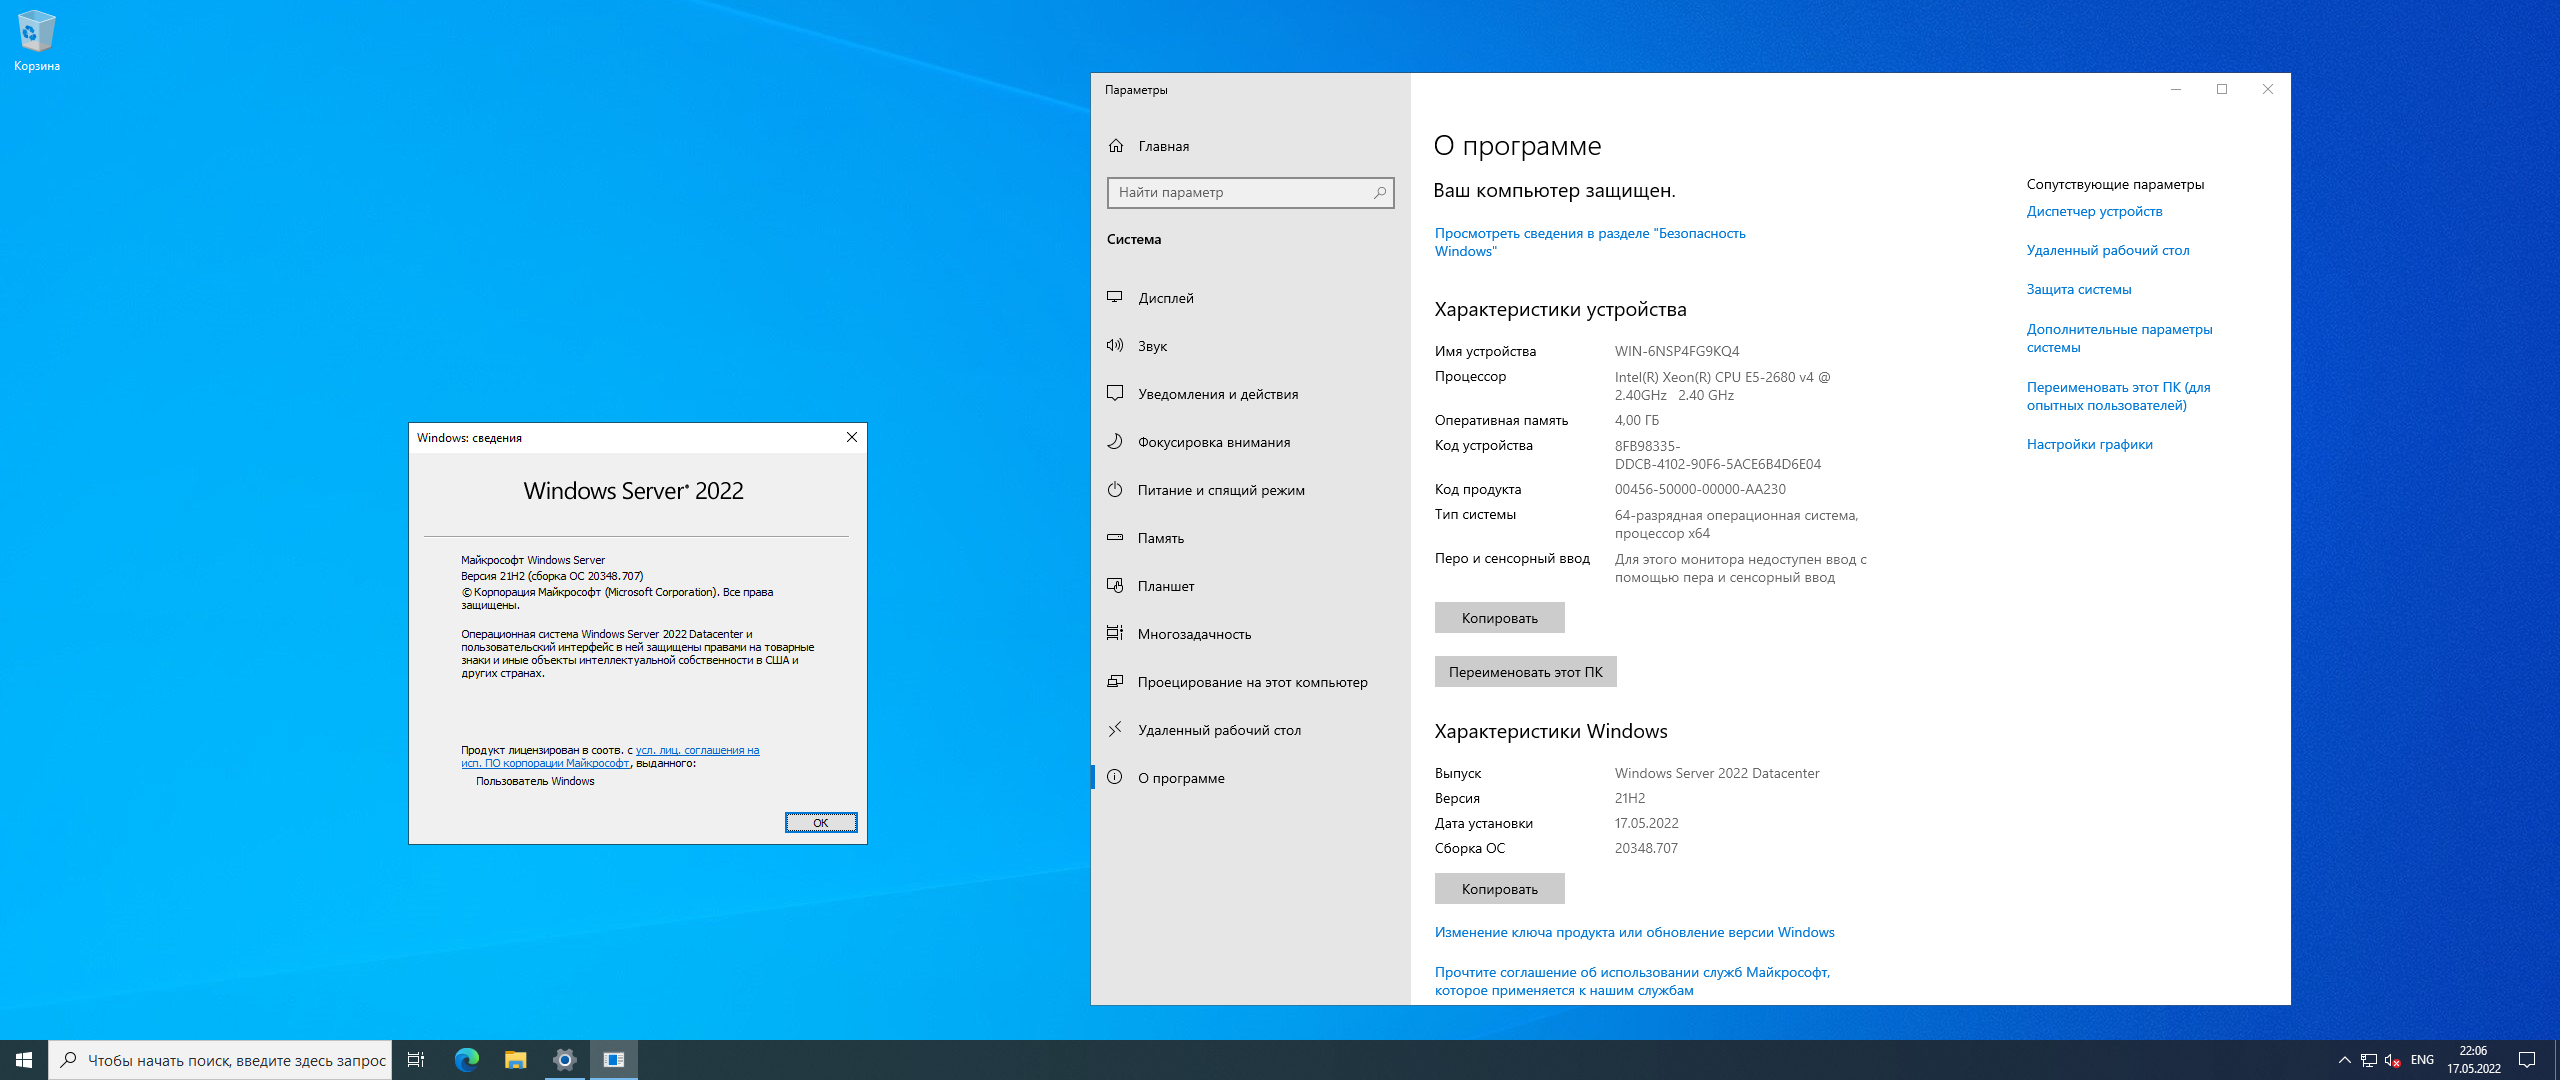 Windows Server 2022 LTSC, Version 21H2 Build 20348.707 (Updated May 2022) - Оригинальные образы от Microsoft MSDN [Ru/En]